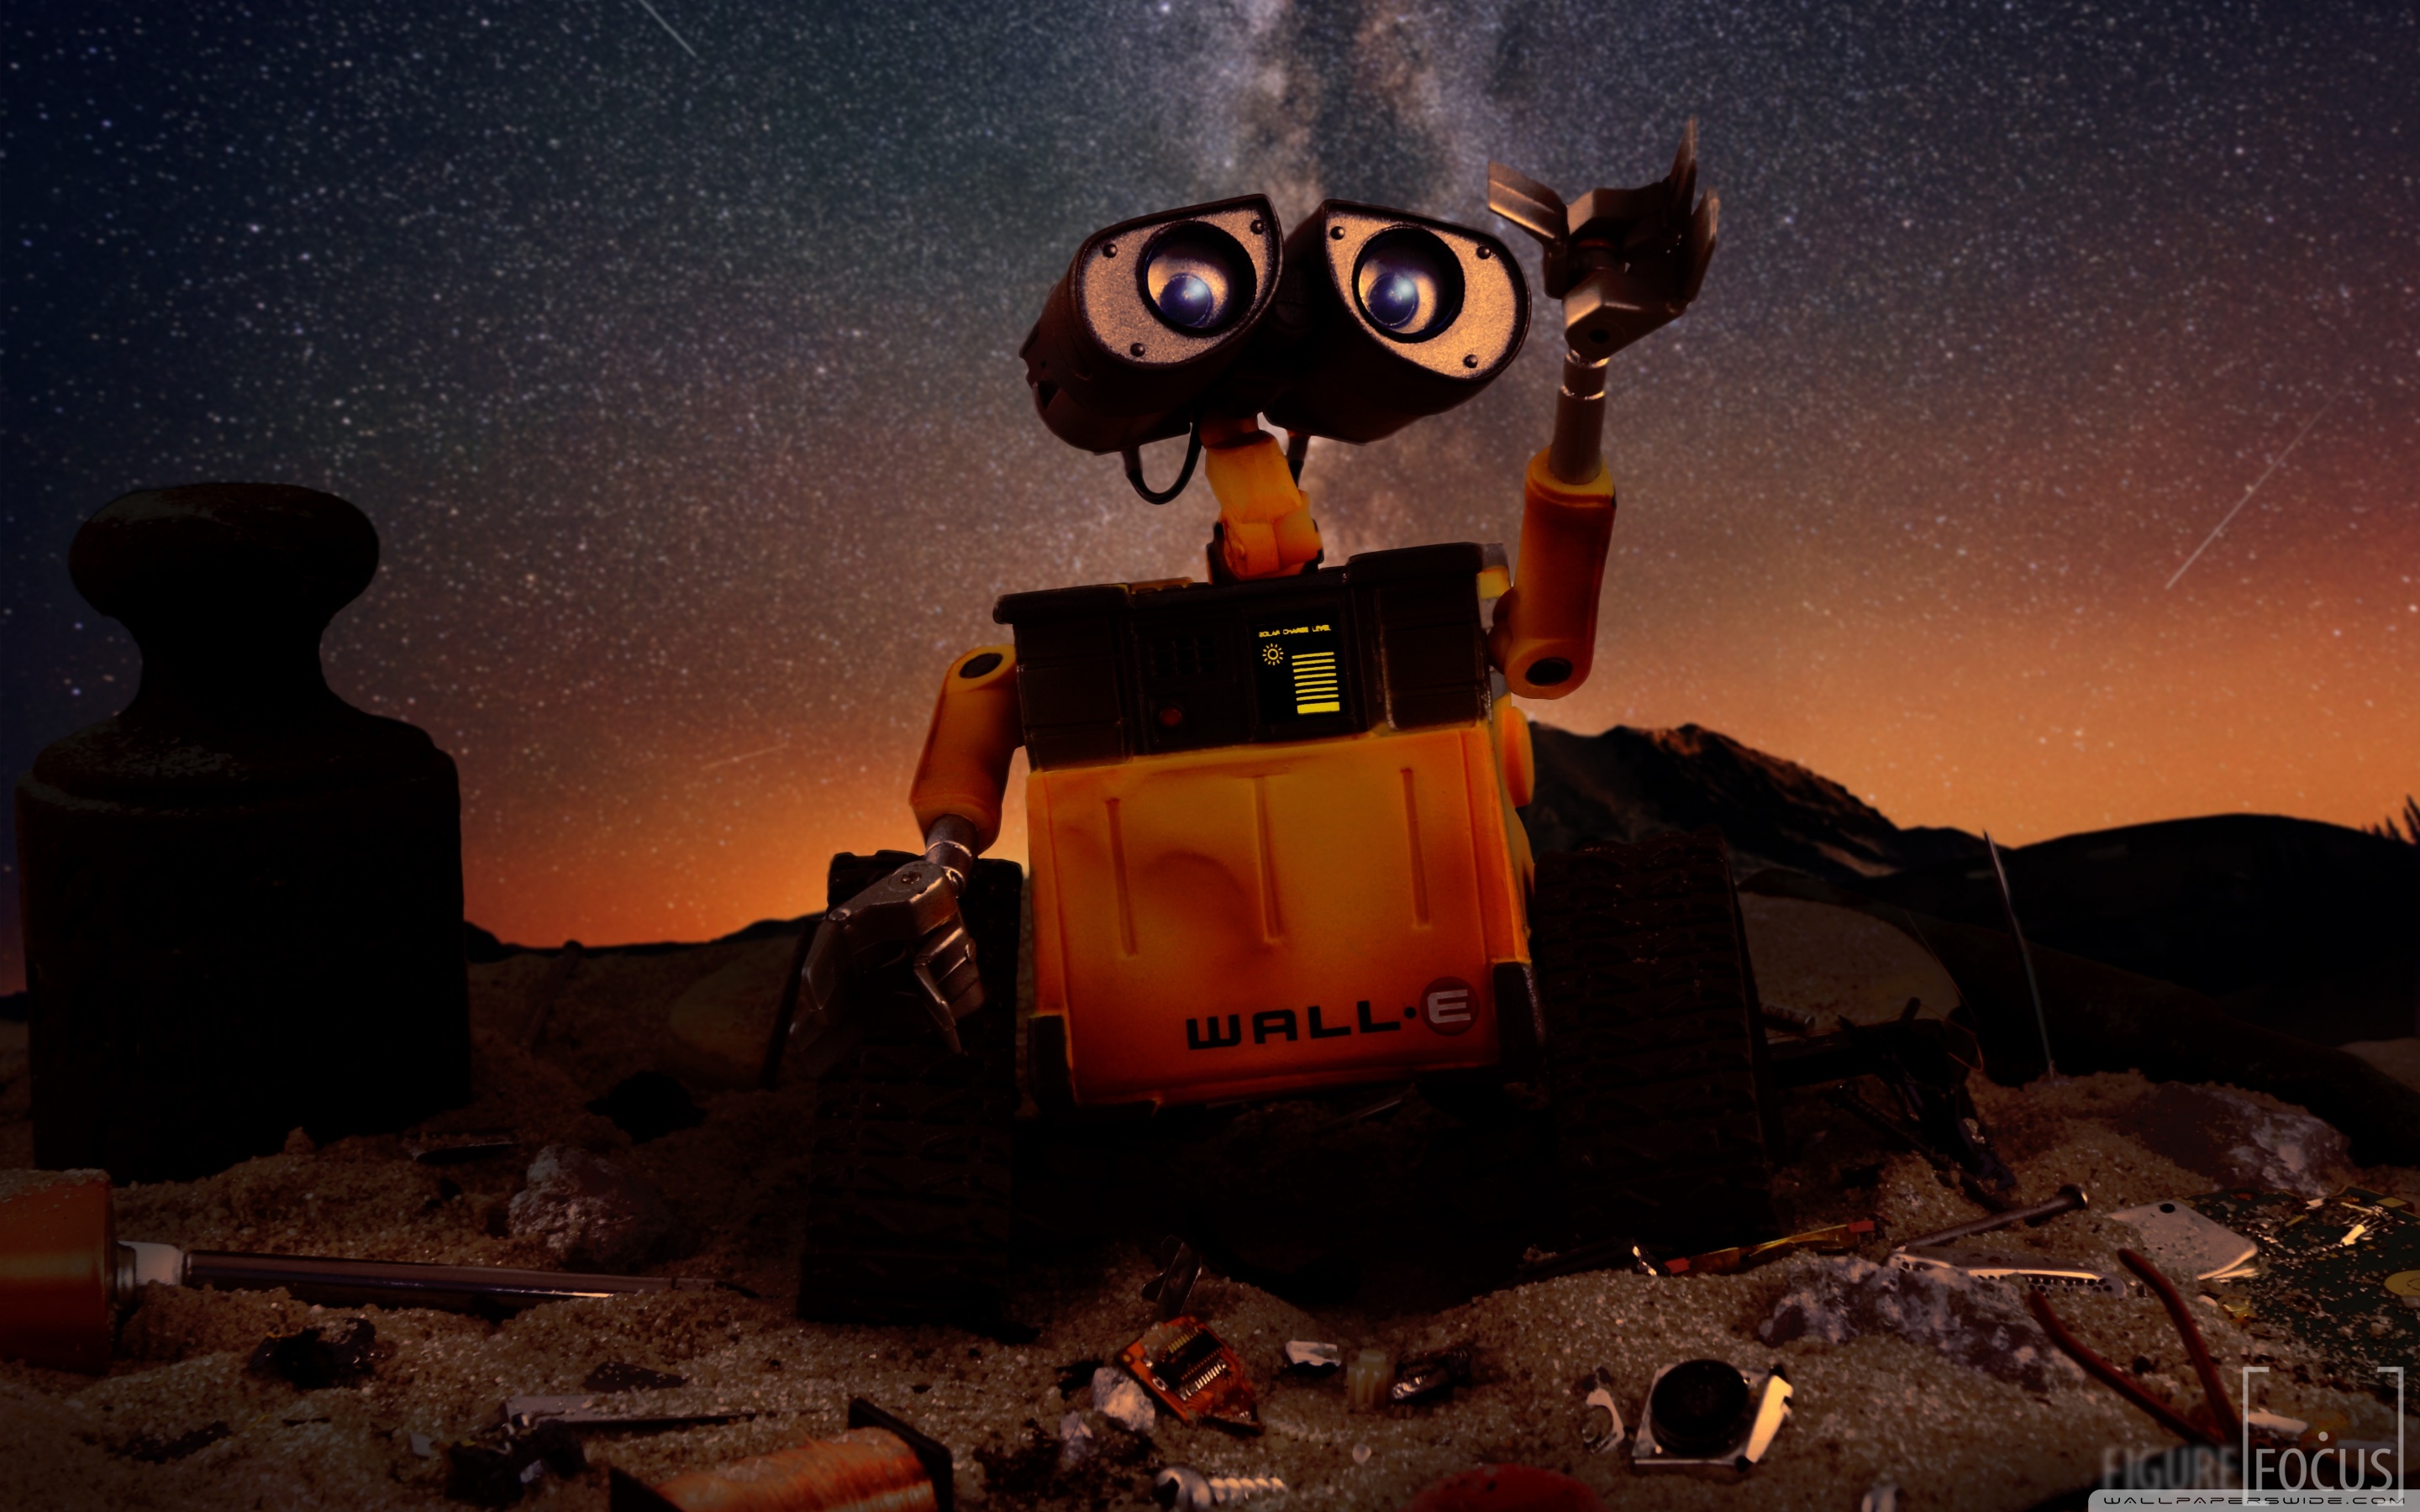 Download WALL-E Robot UltraHD Free Wallpaper.